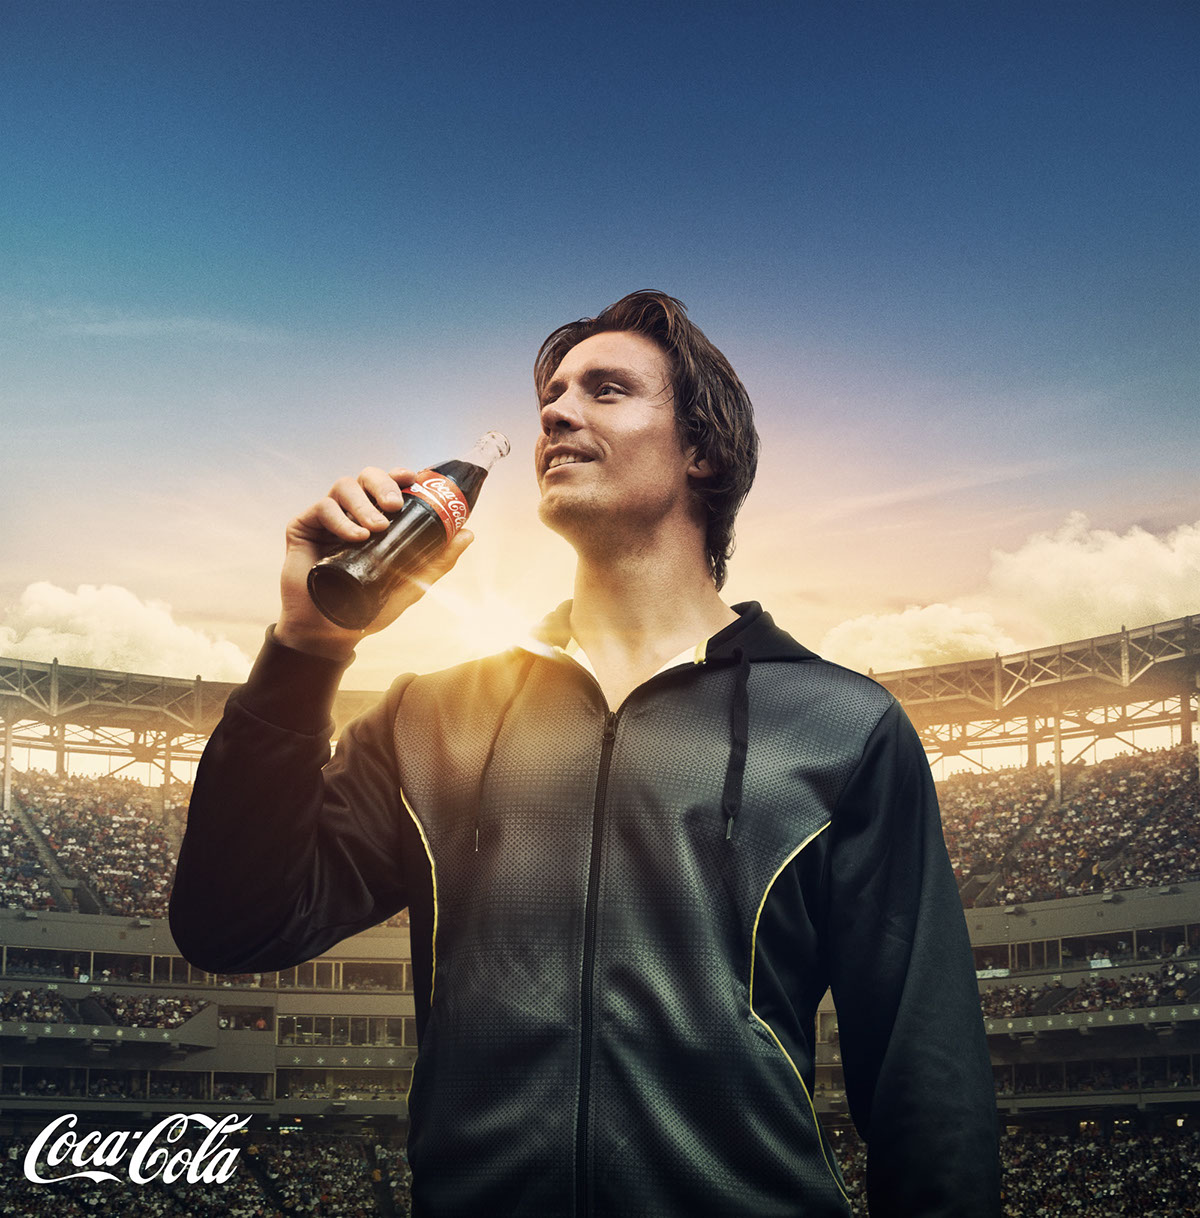 Rune Bendiksen hanrune Coca Cola retouch cool image